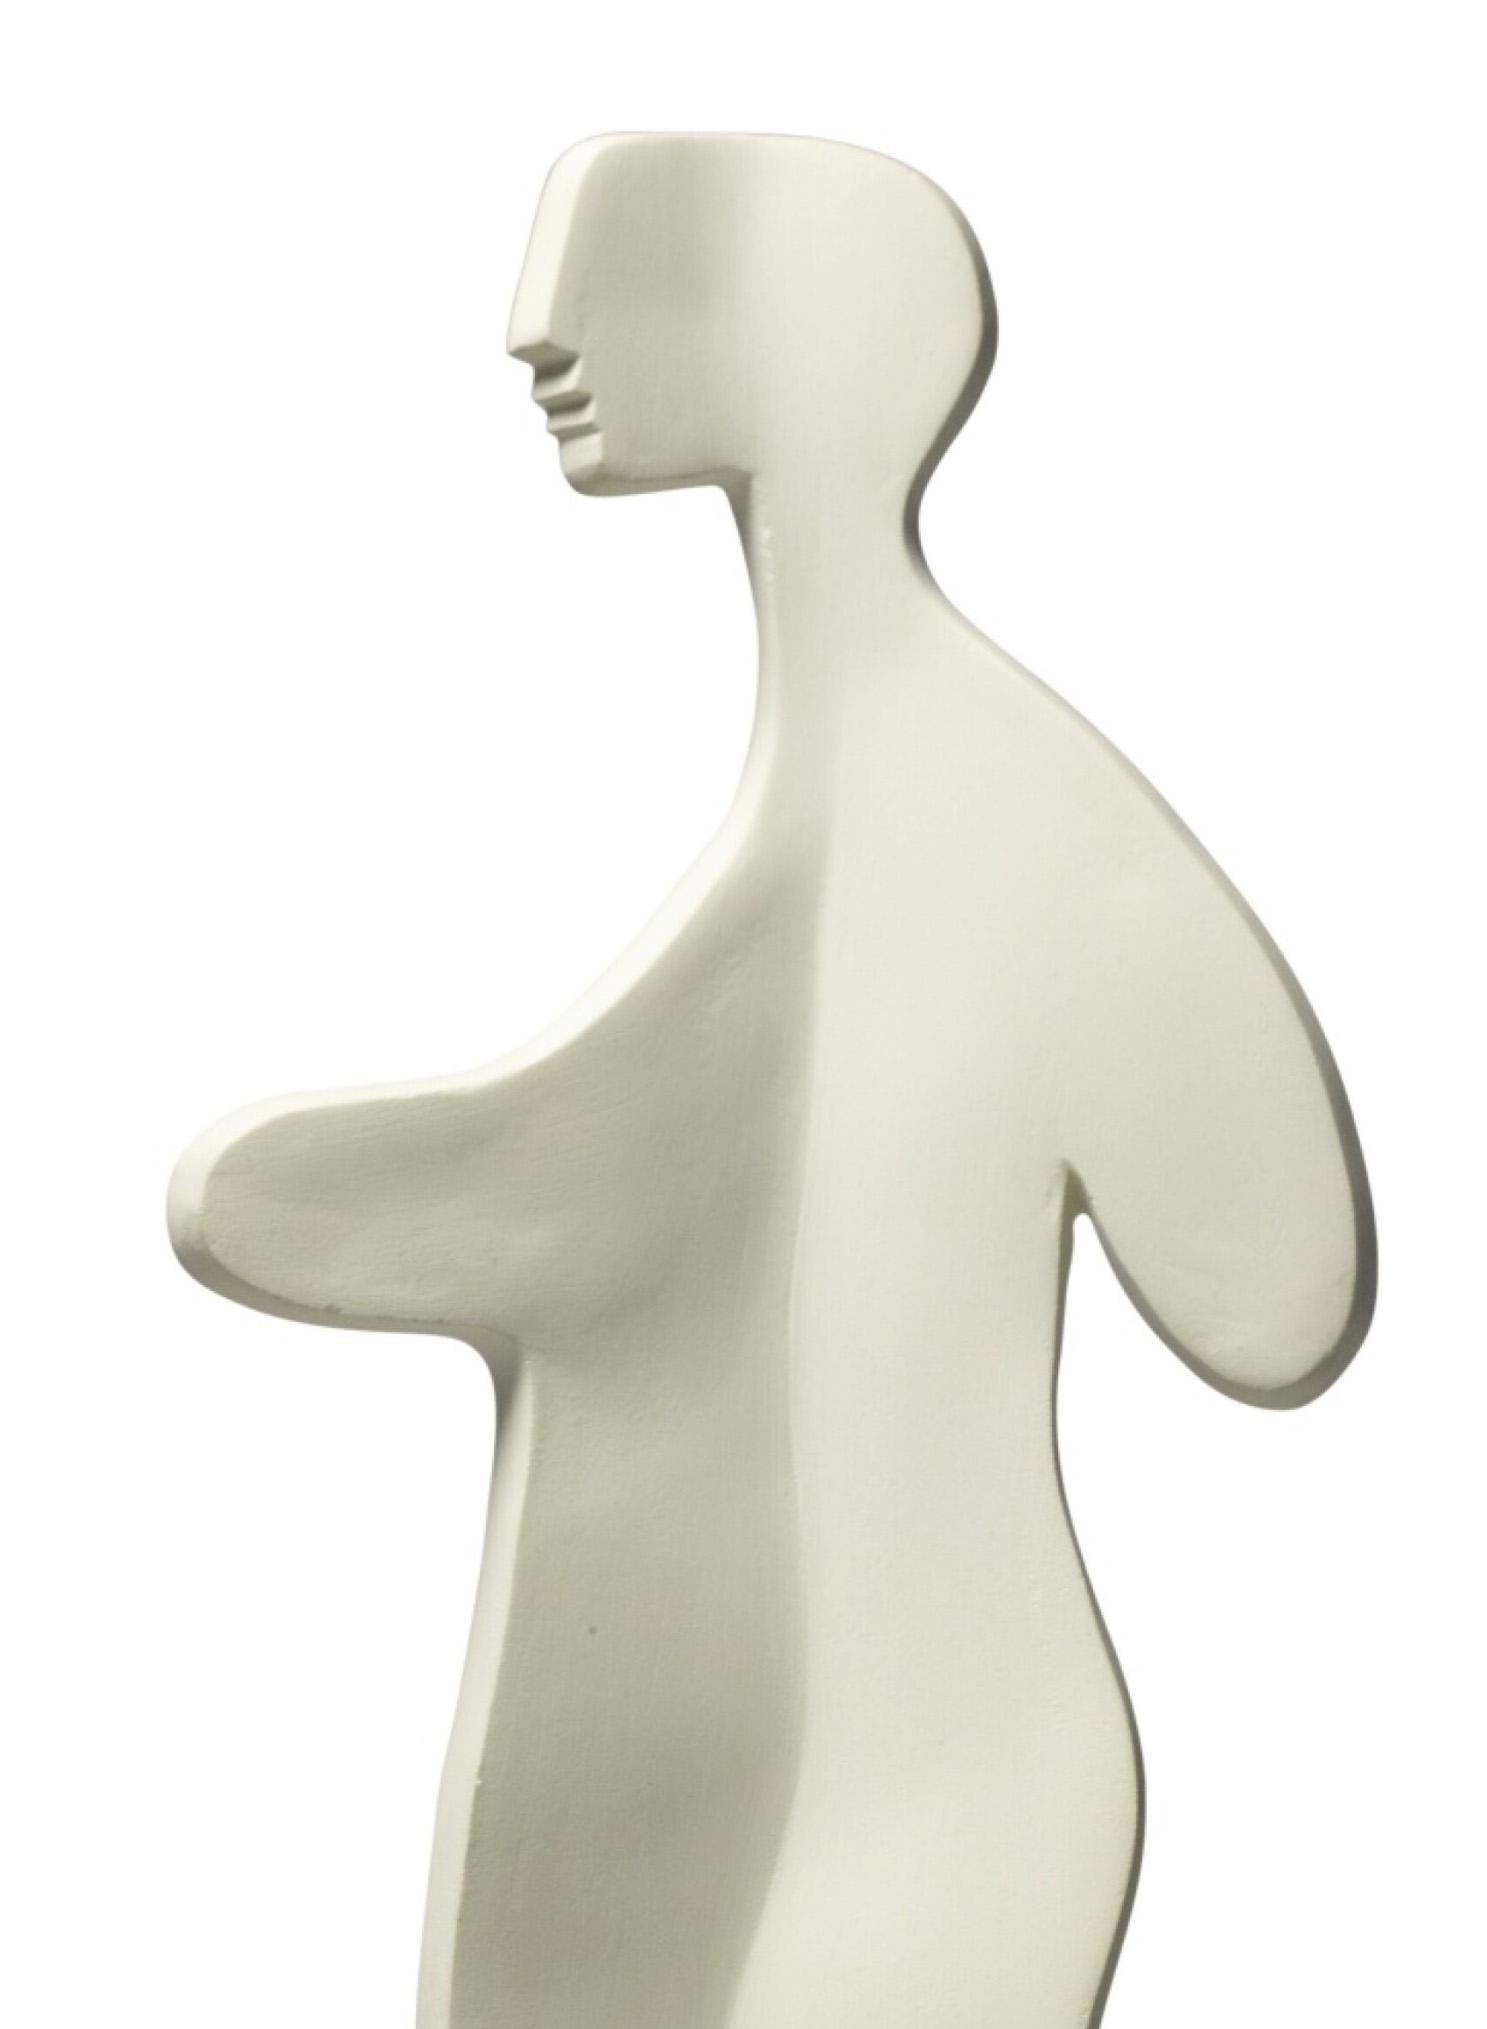 Petite tête, profil gauche (Kleiner Kopf, linkes Profil), A.R. 535 – Sculpture von Pablo Picasso